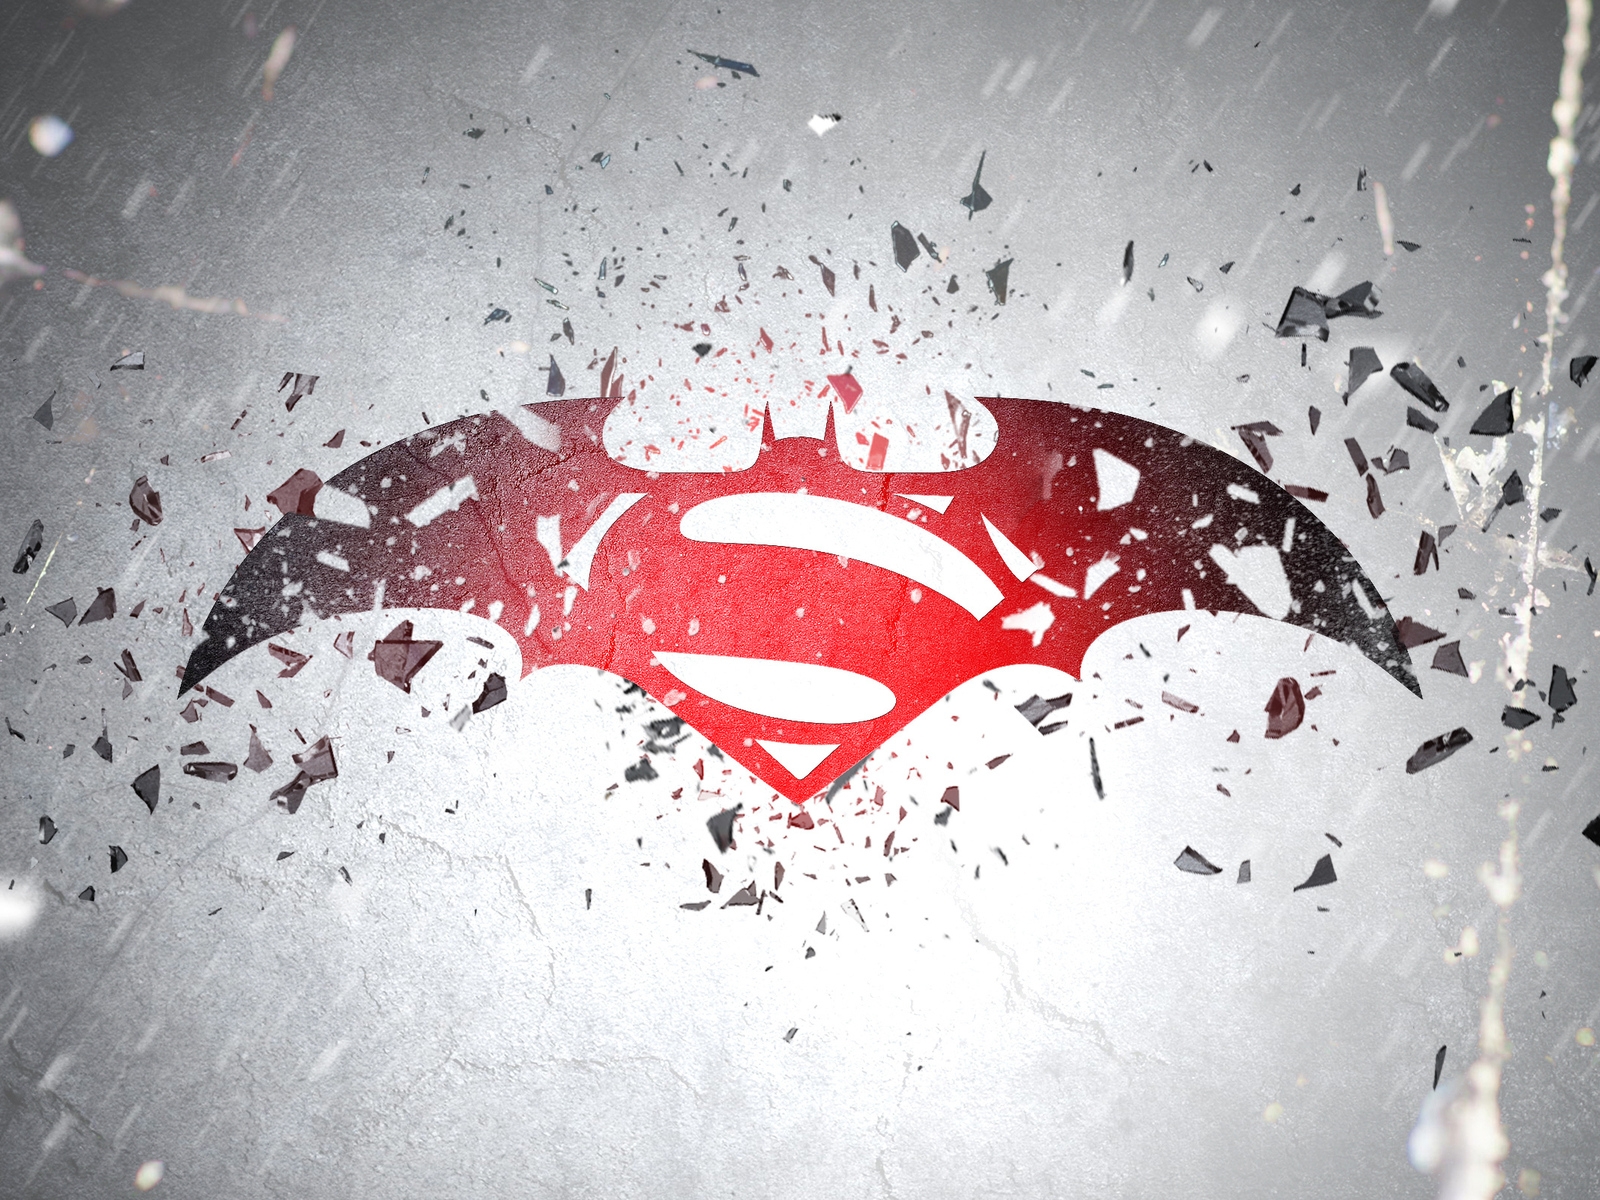 Batman vs Superman Awesome Logo for 1600 x 1200 resolution